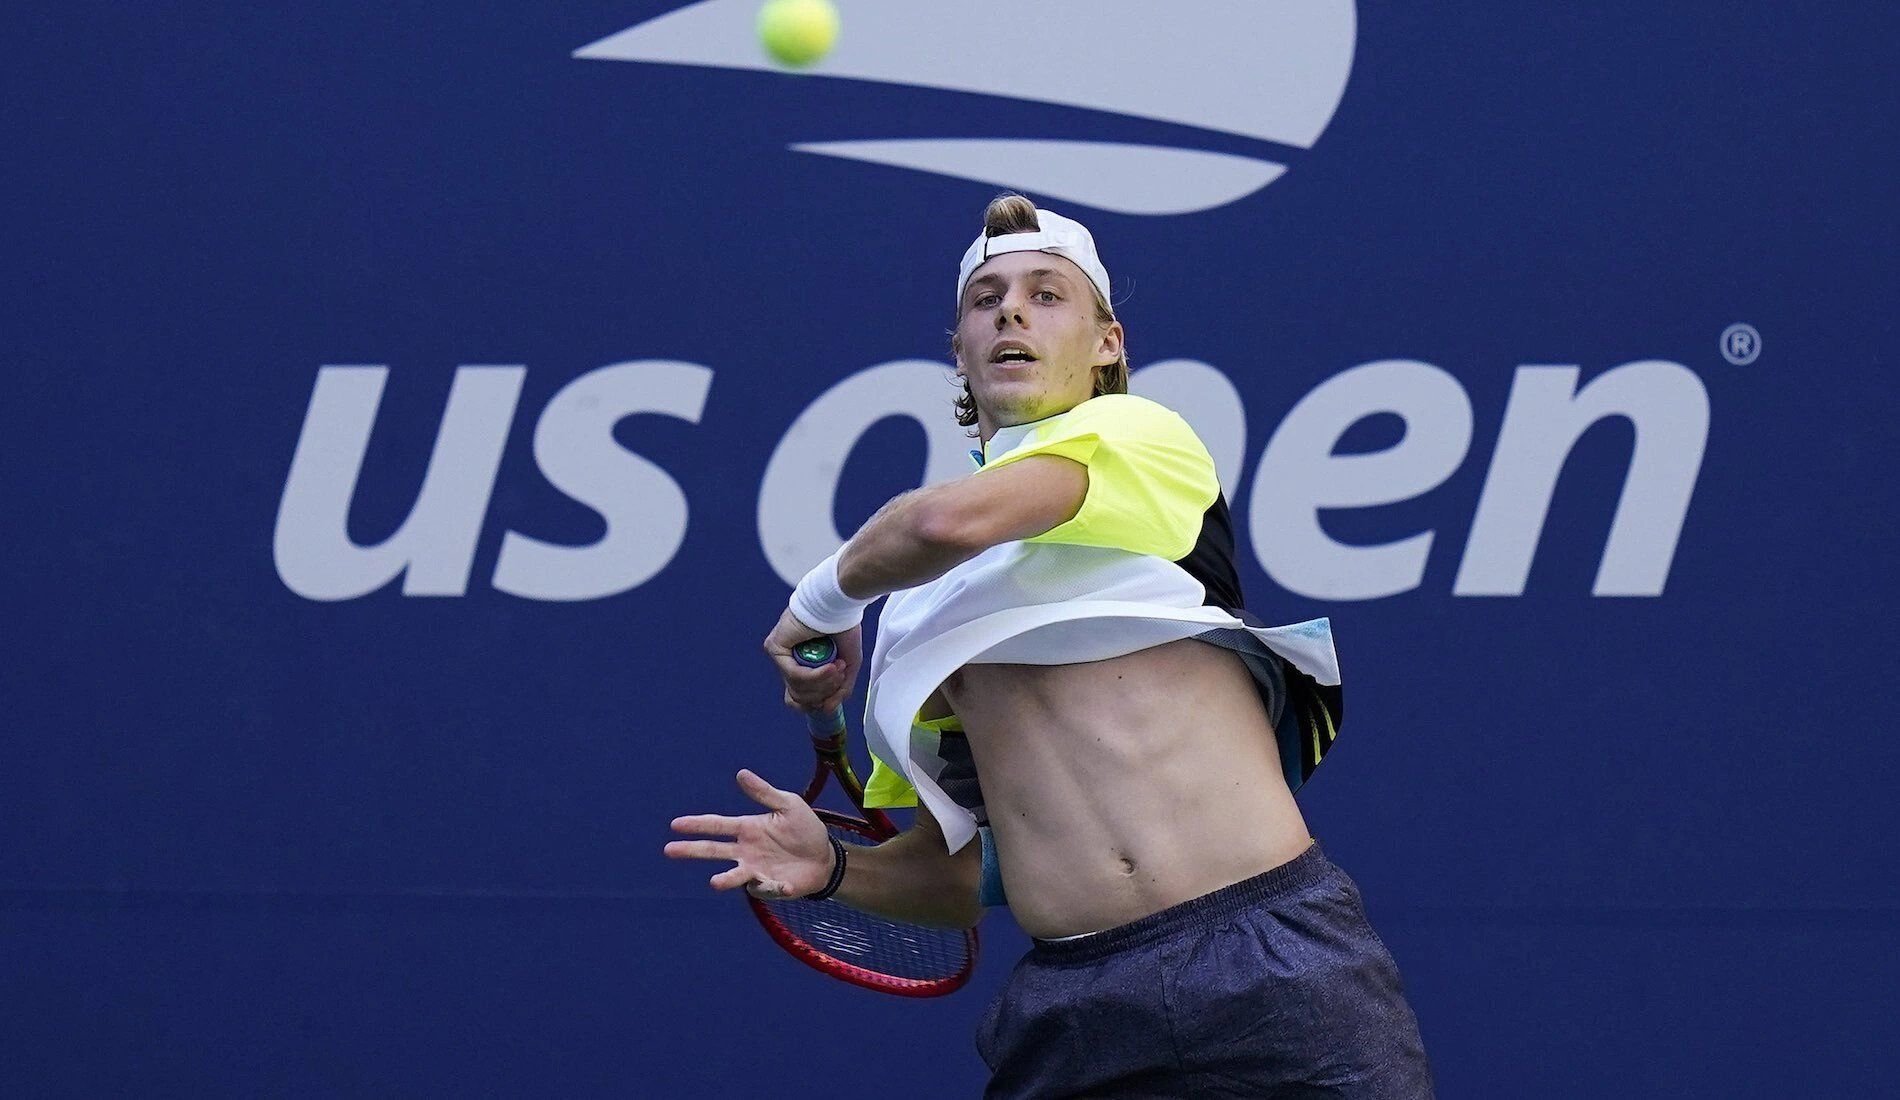 Tennis, ATP – Vienna Open 2022: Shapovalov defeats Rodionov